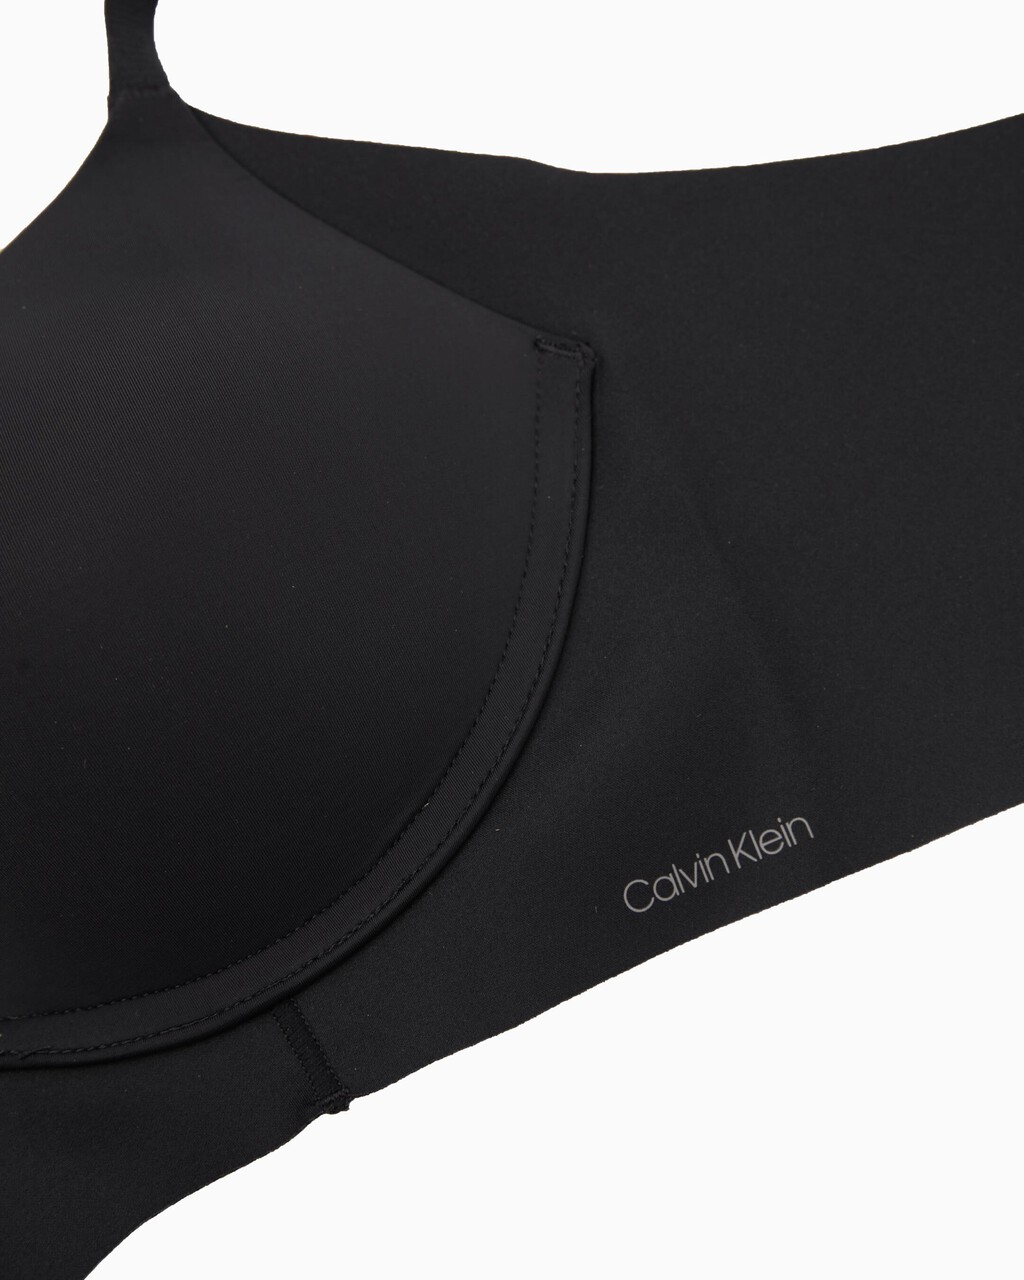 Calvin Klein Underwear INVISIBLES (TAILORED NSE) PUSH UP PLUNGE